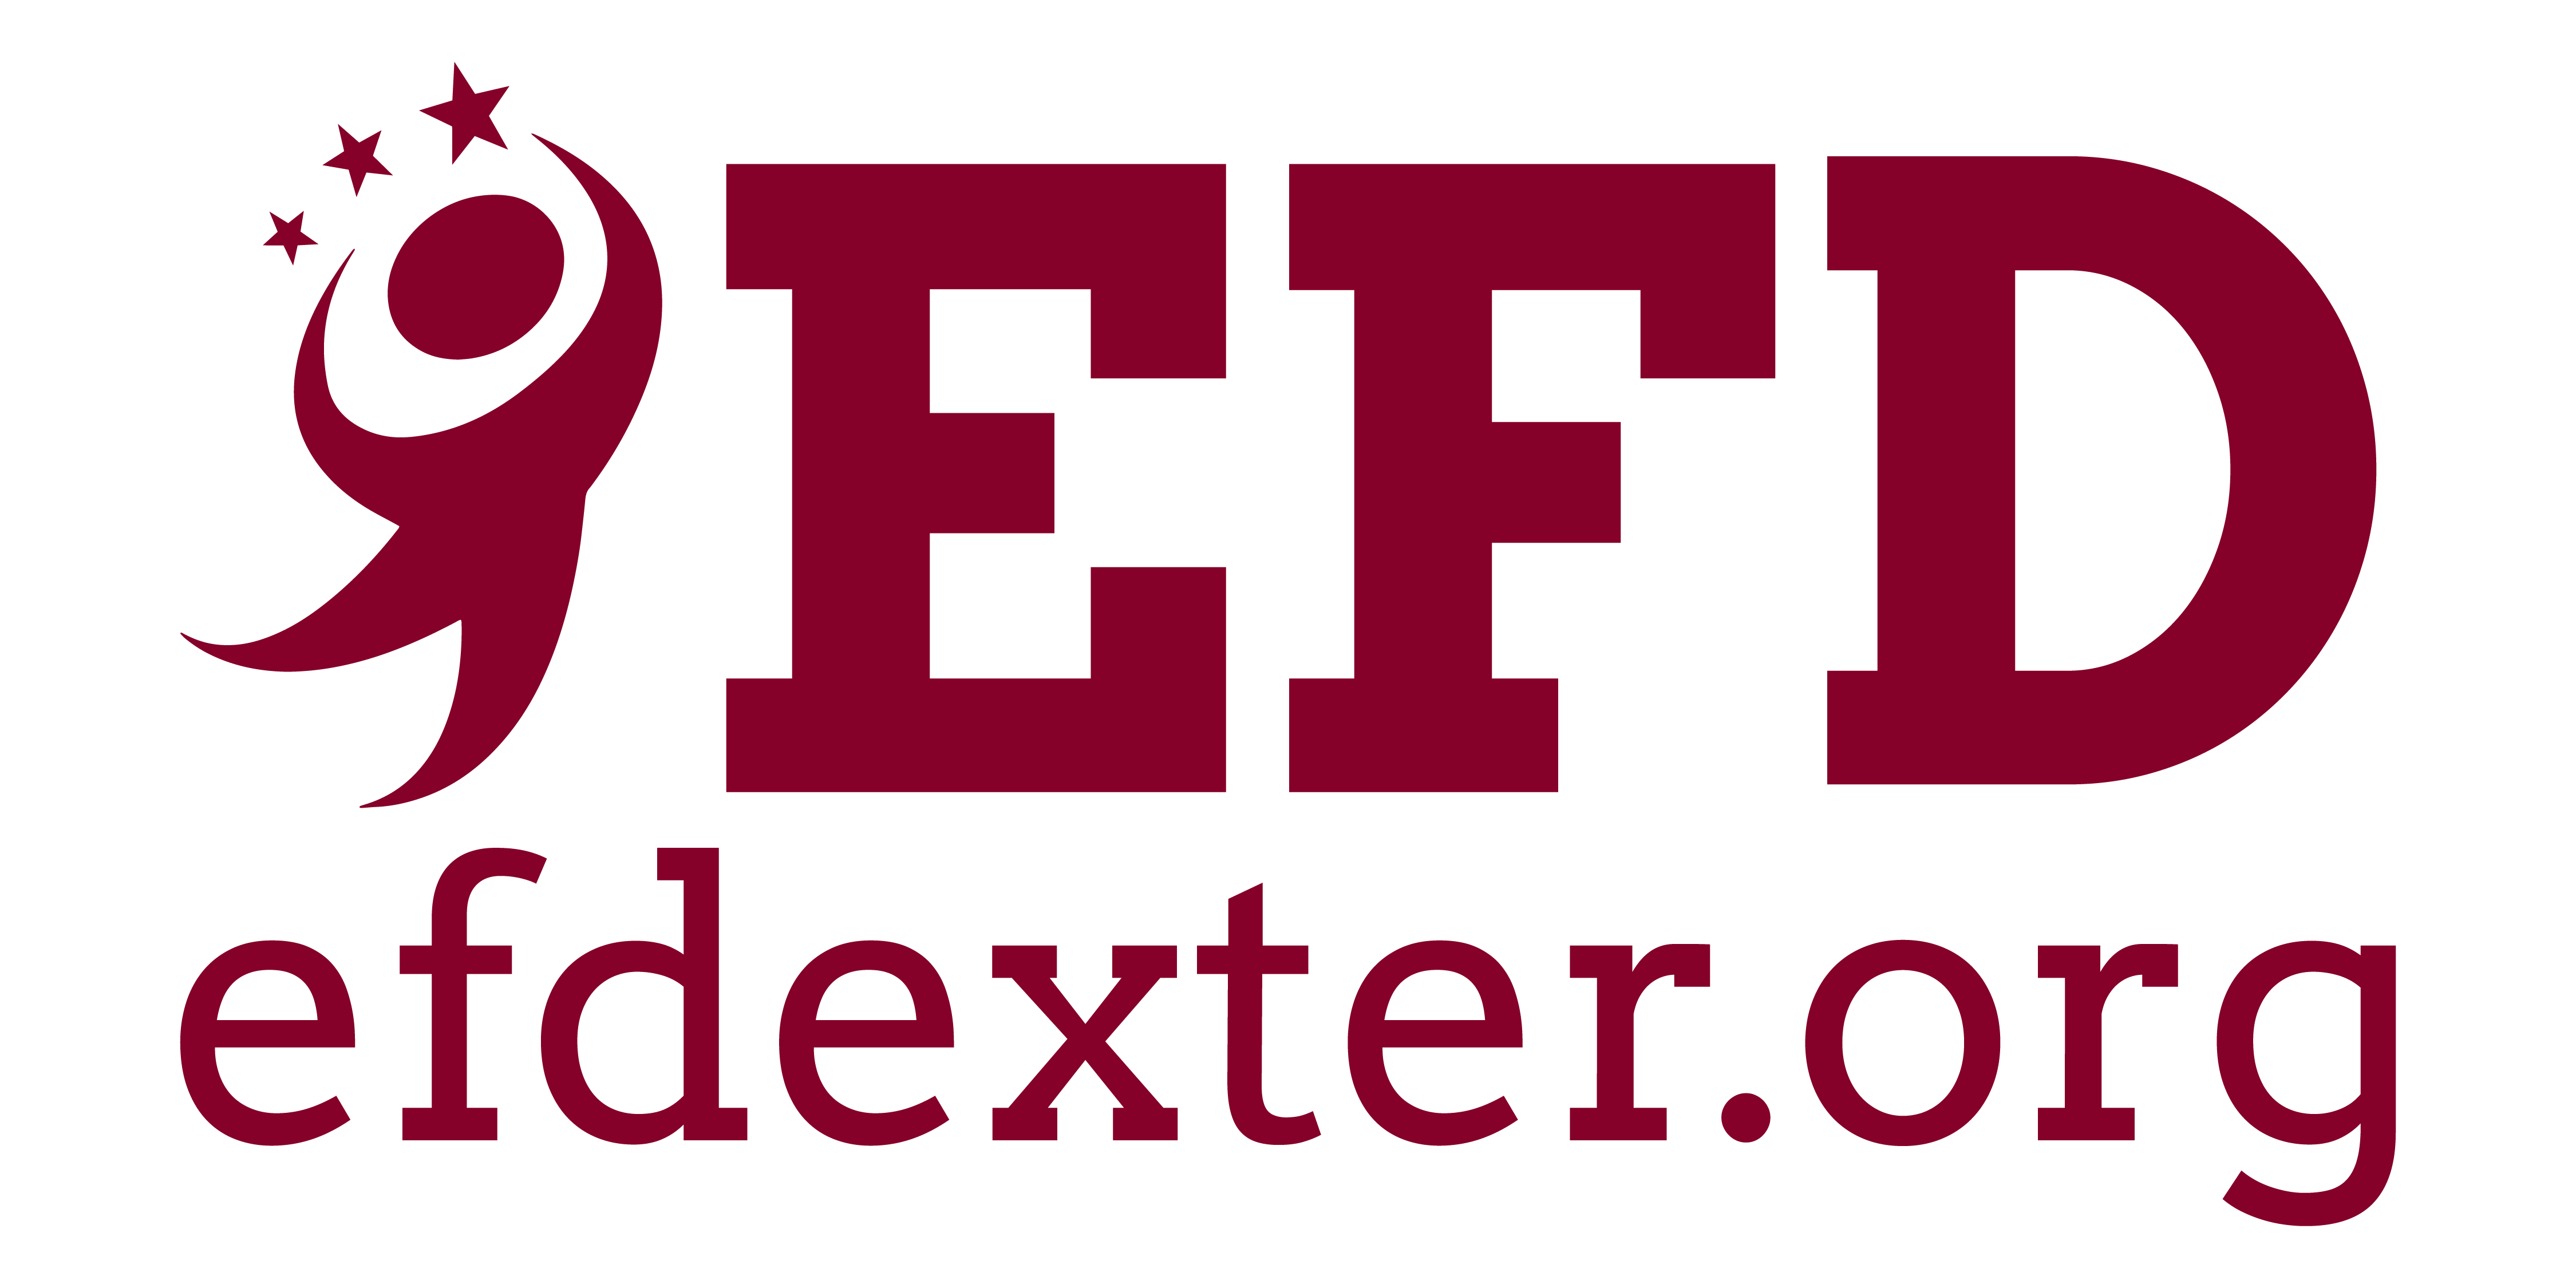 EFD logo